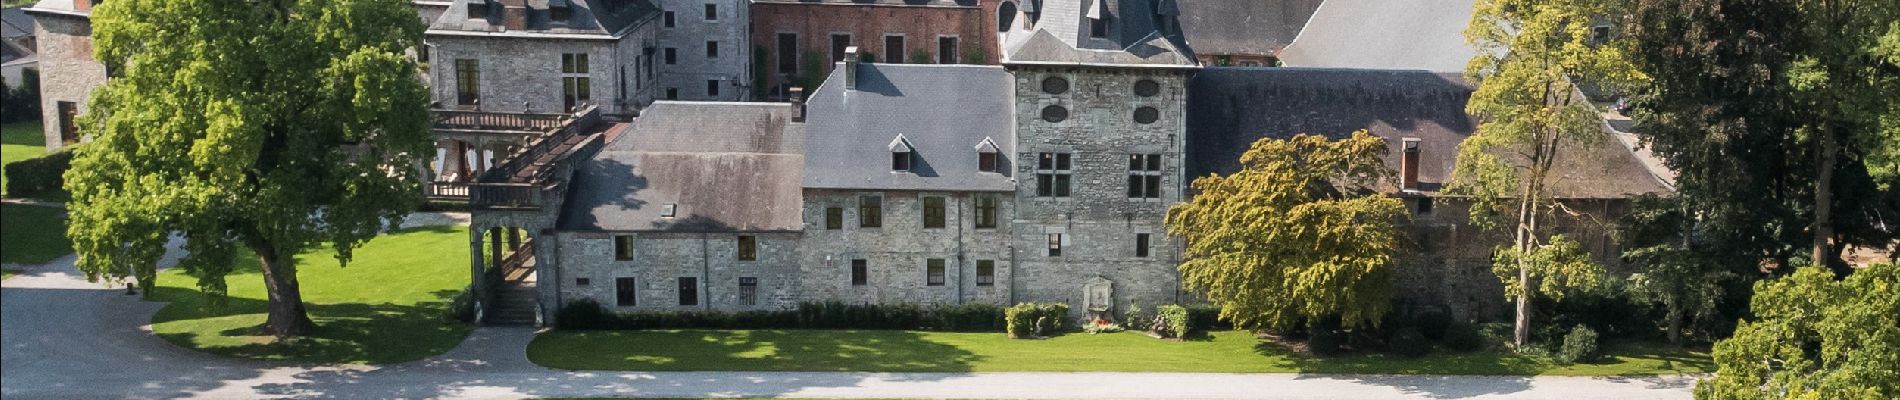 POI Anhée - Château de Bioul - Photo